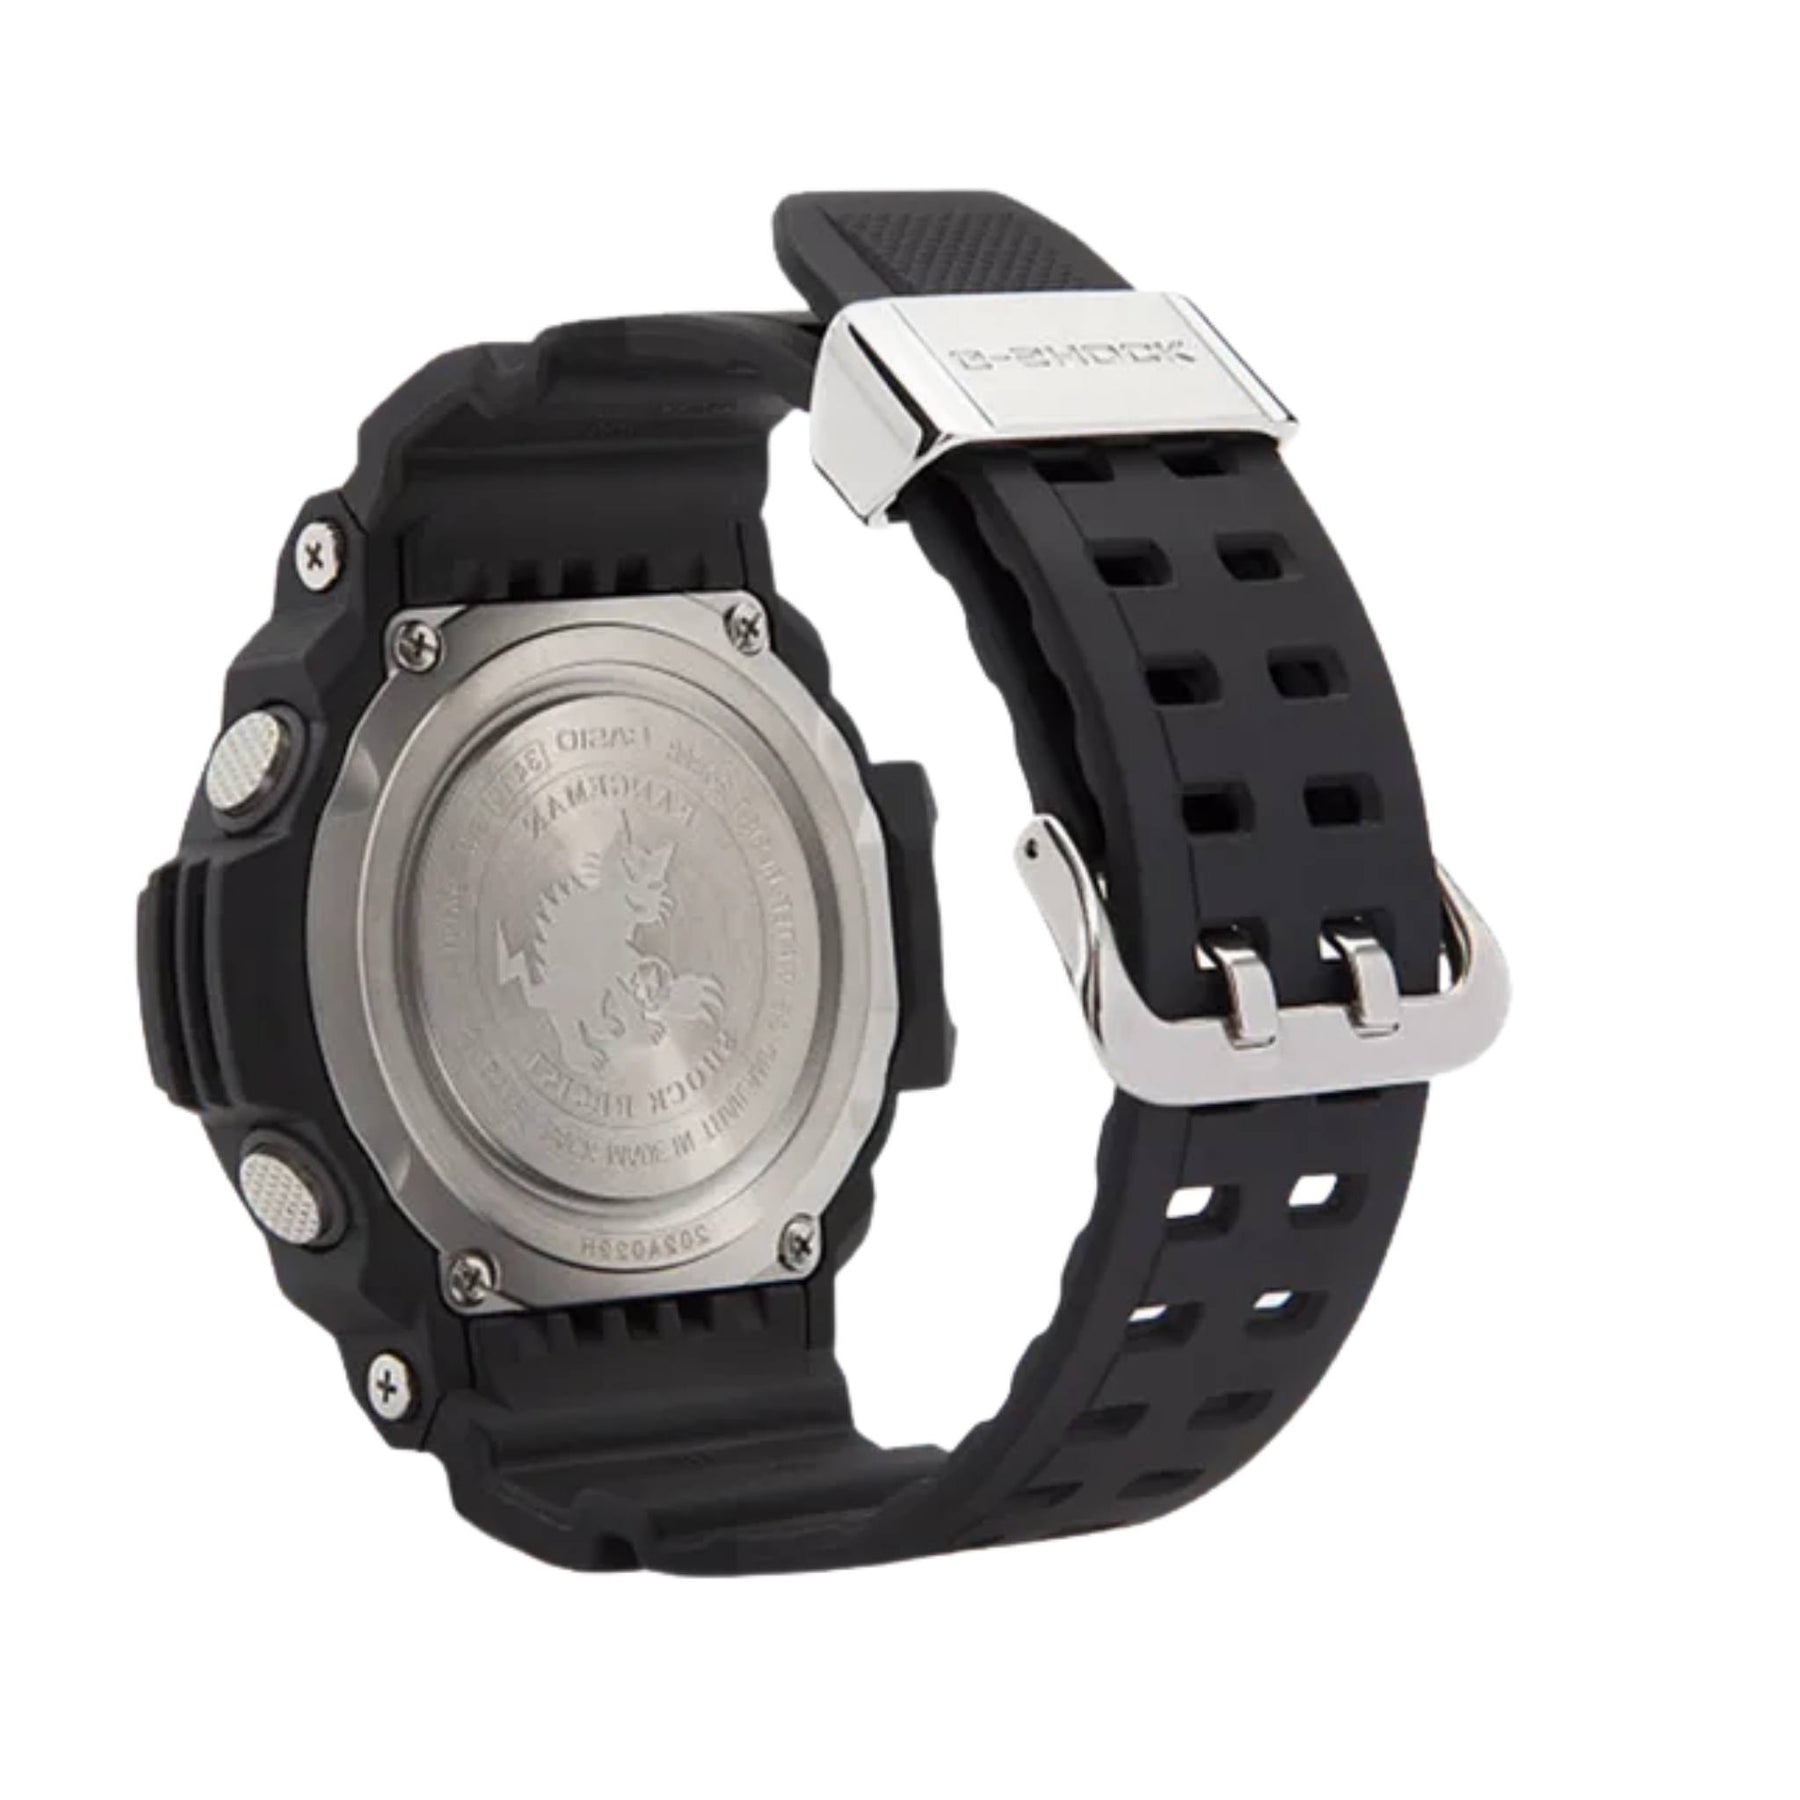 Casio G-Shock GW9400-1 Rangeman Triple Sensor Watch - Black